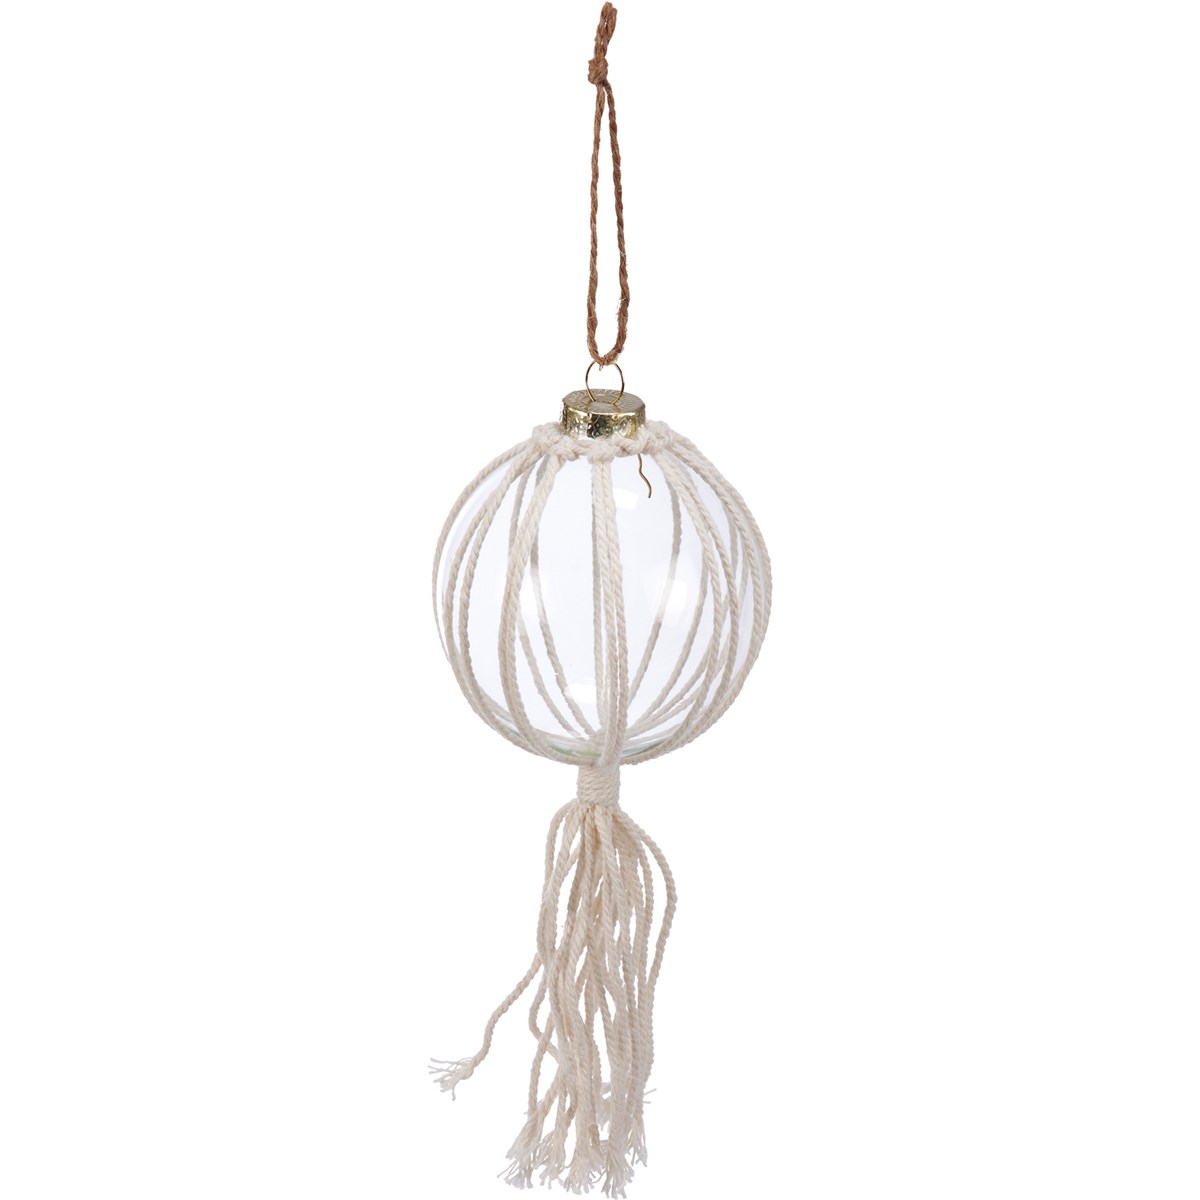 Macrame Balls Ornament Set - Glass, Cotton, Jute, Metal